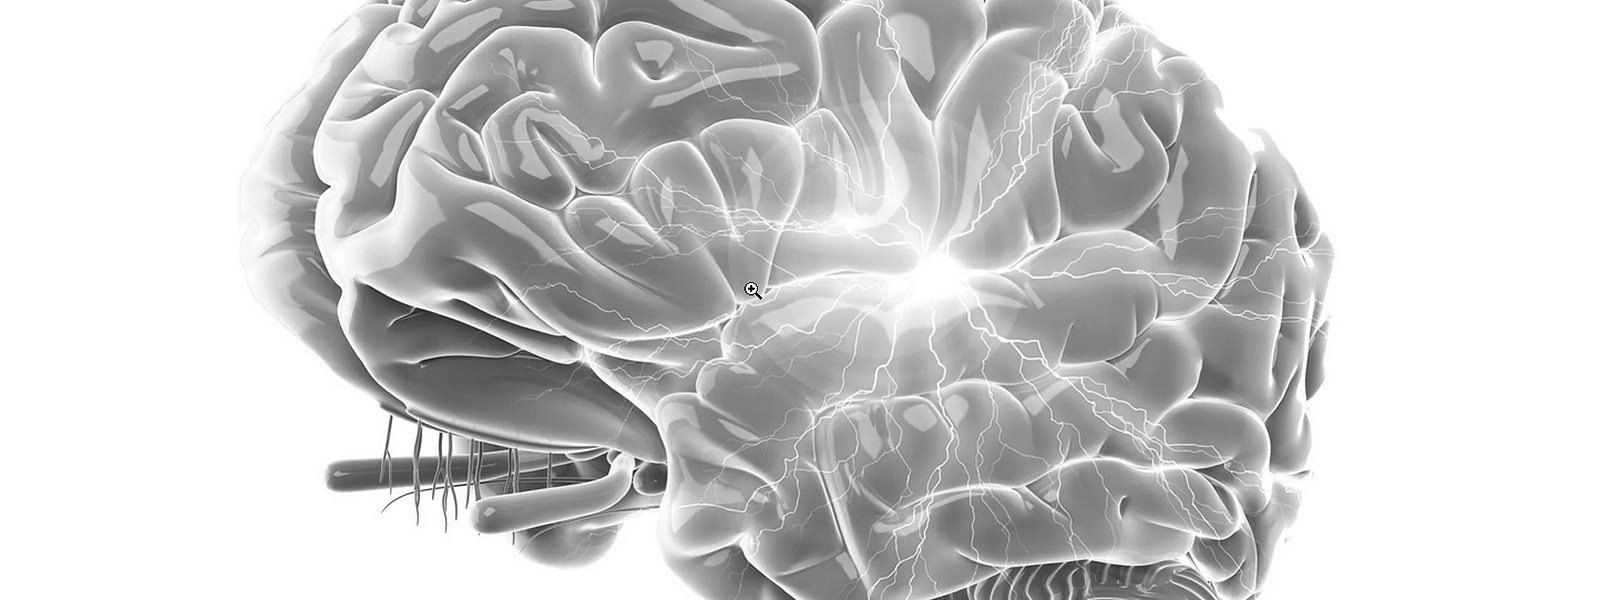 Brain function illustrating mental health issues